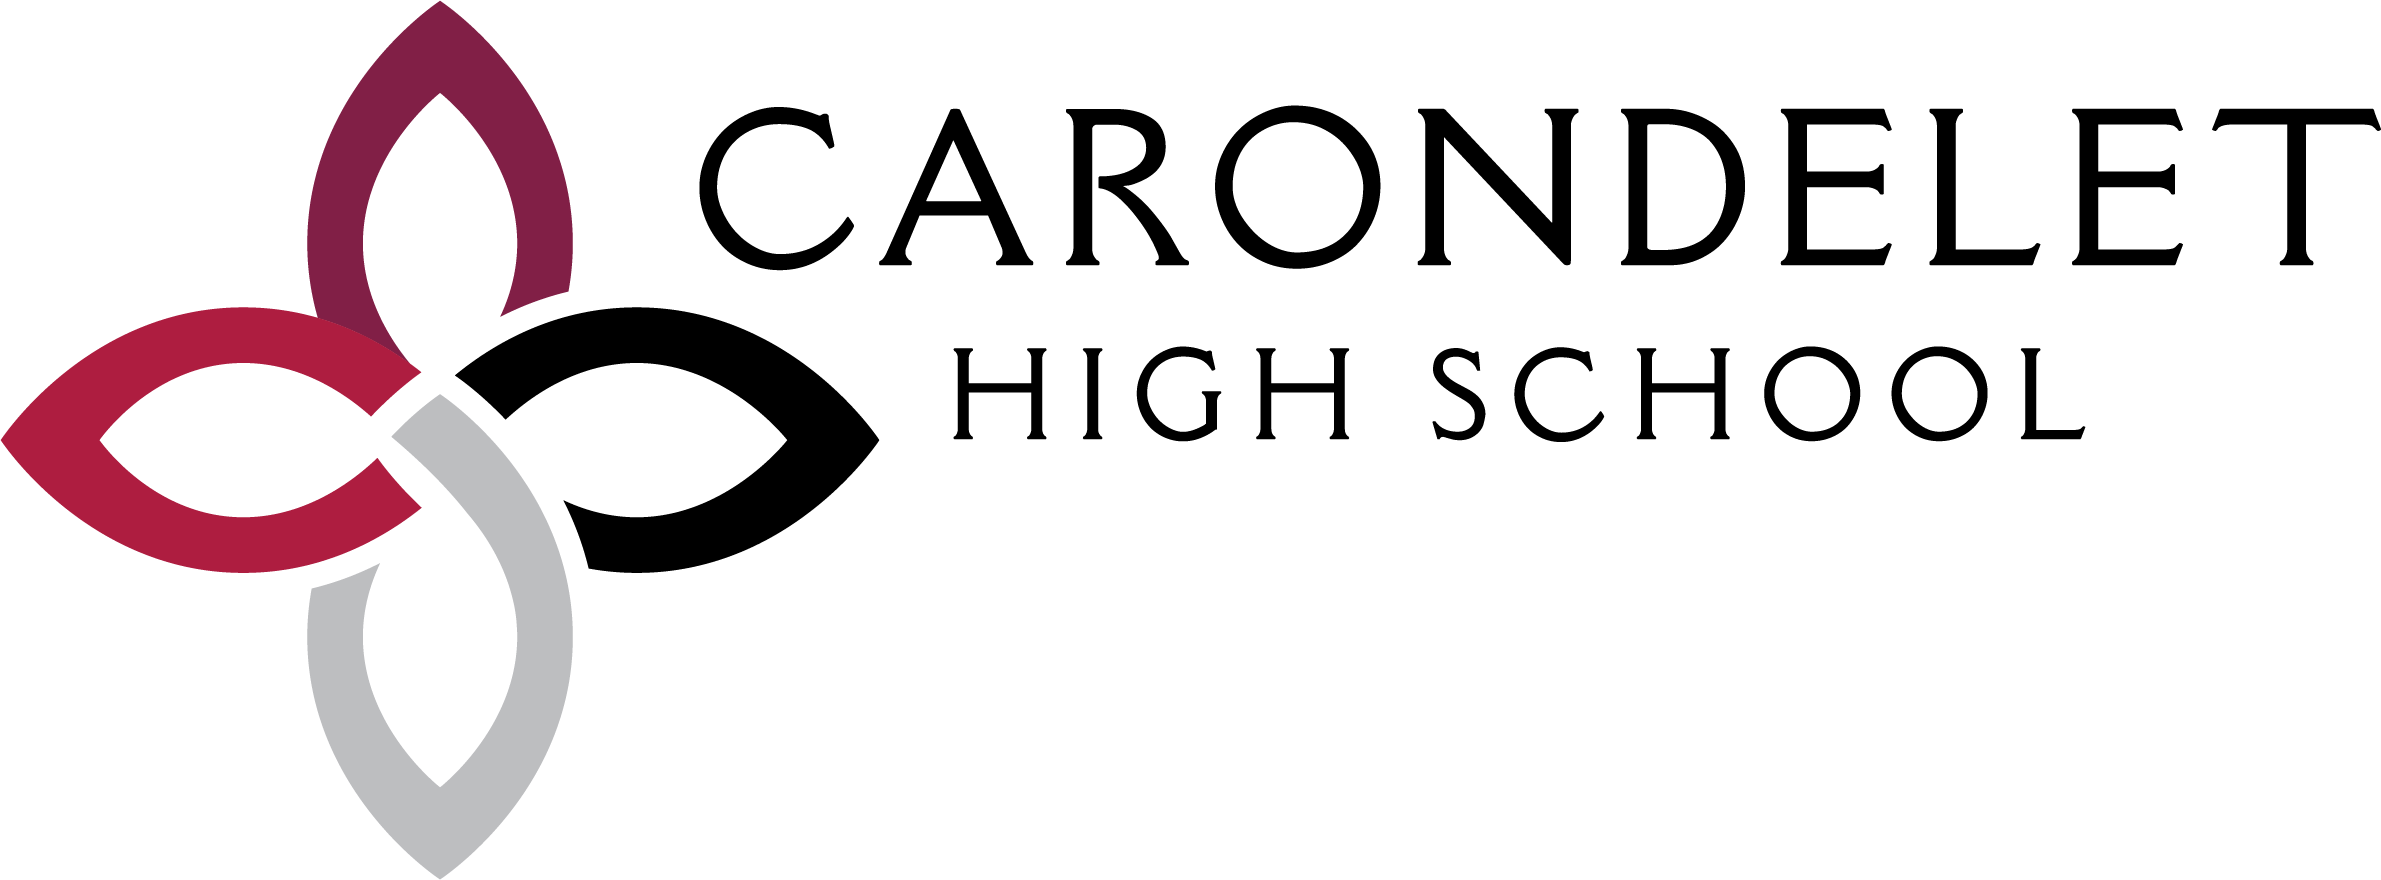 Carondelet High School